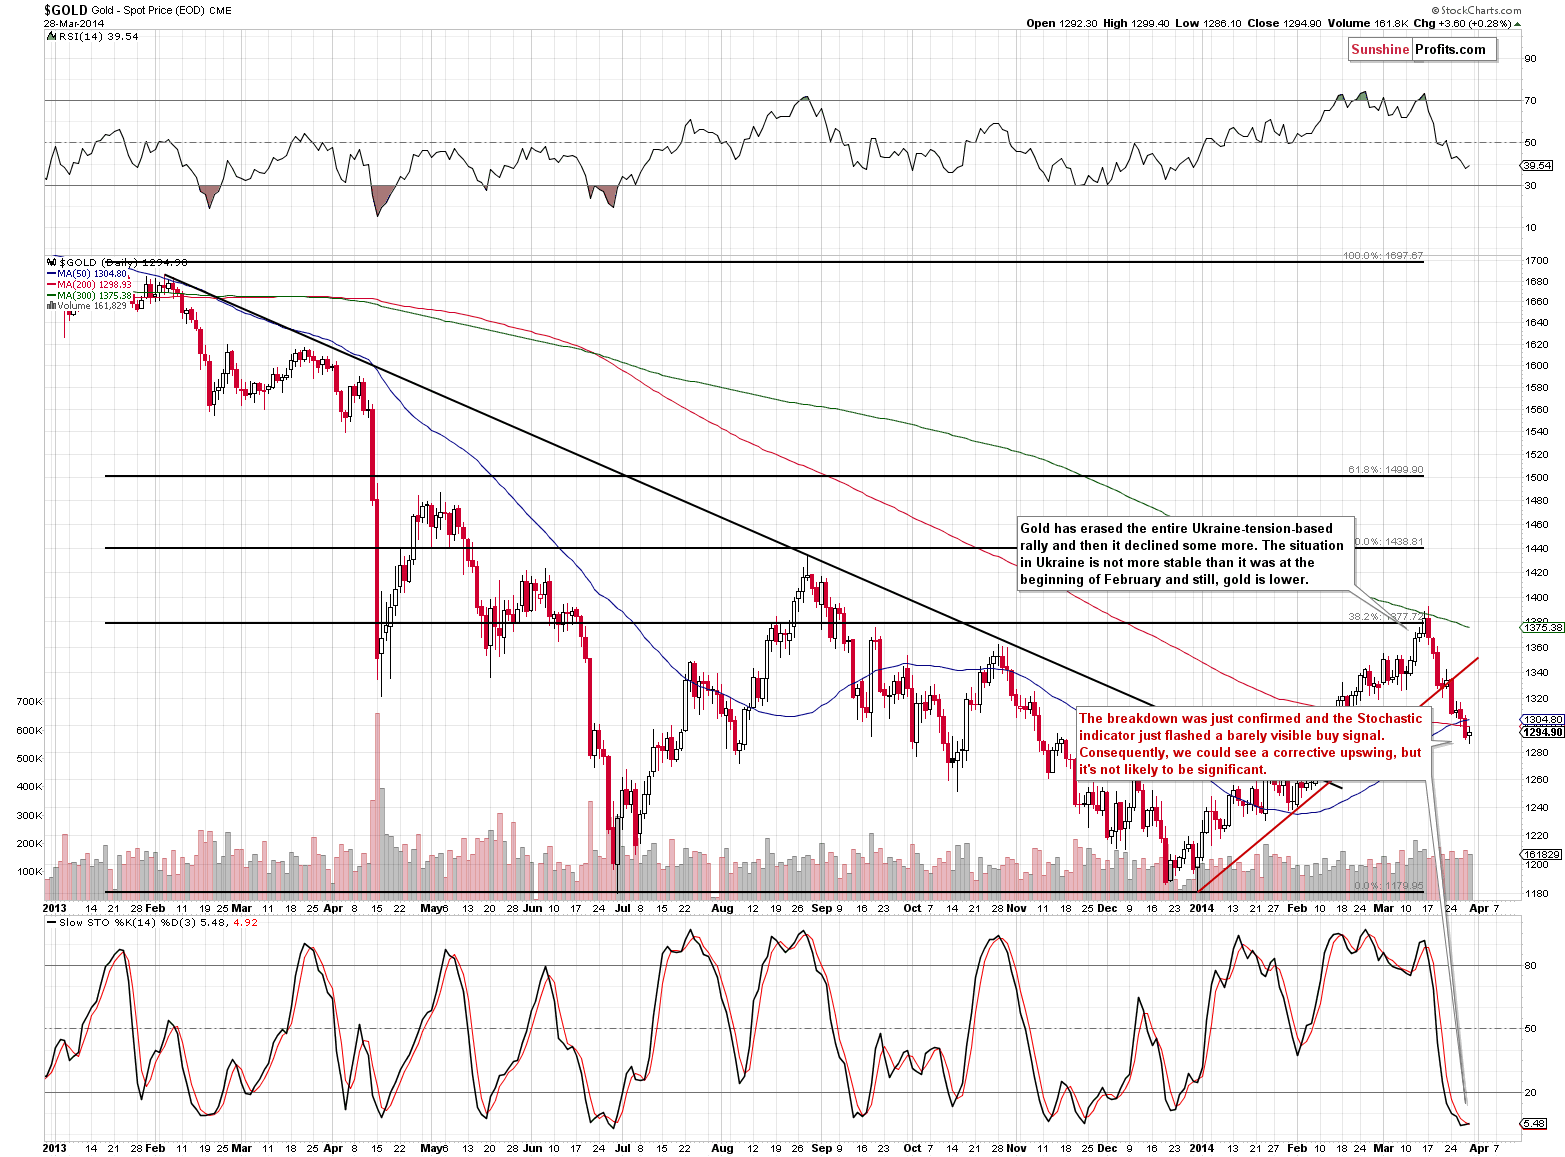 Medium-term Gold price chart - Gold spot price